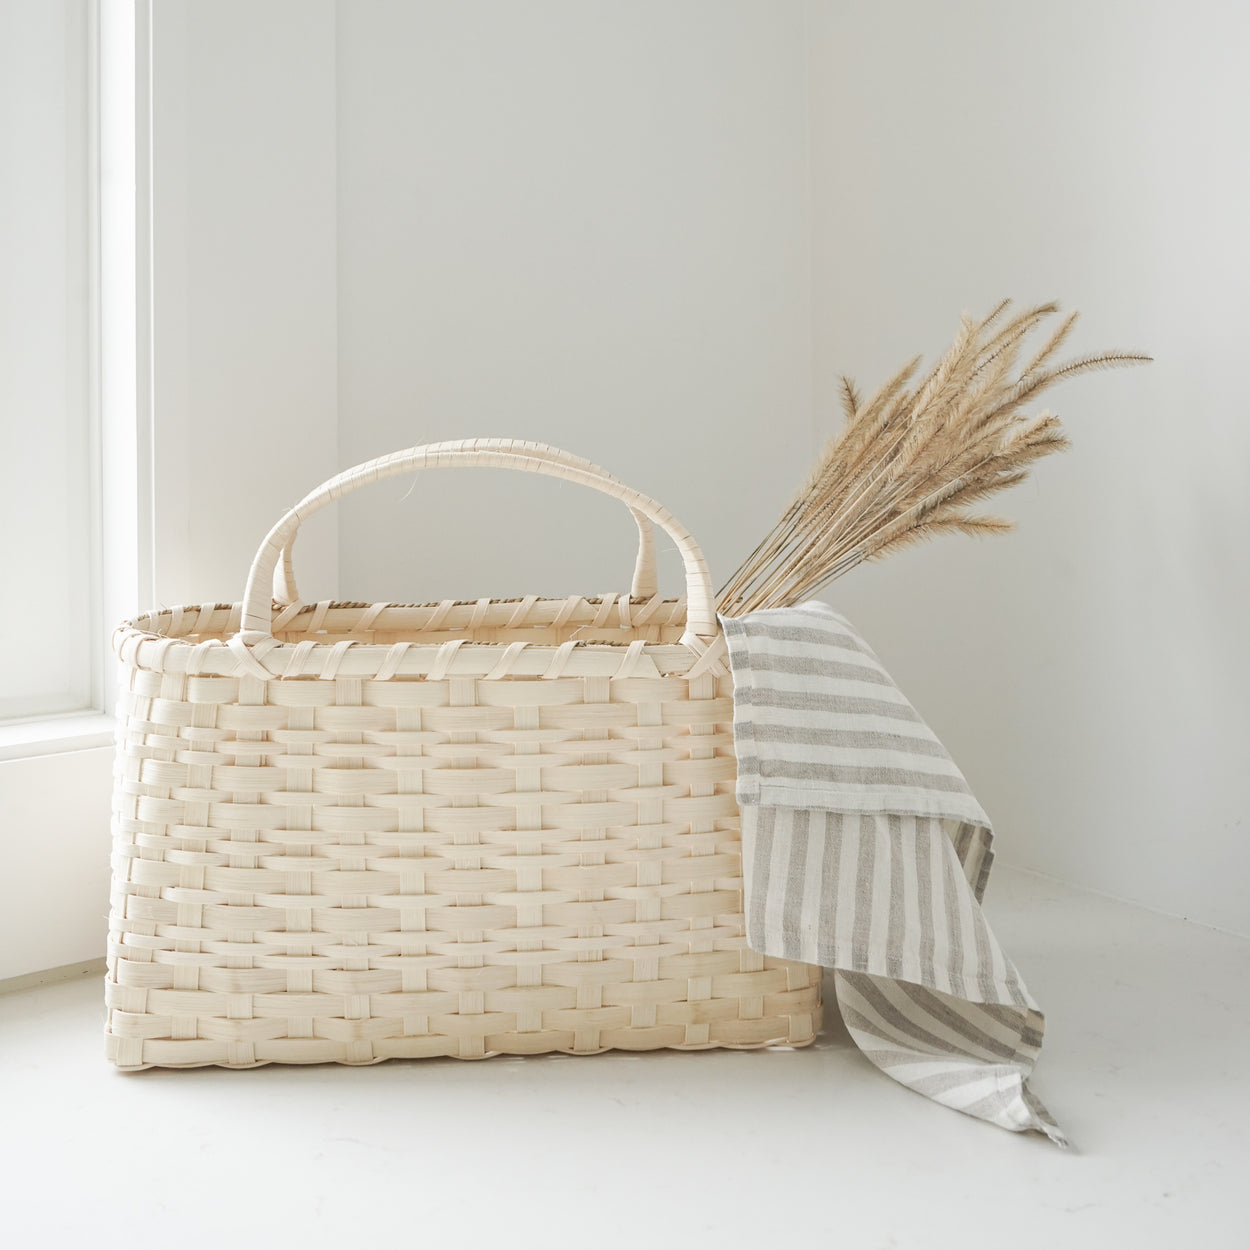 Handmade Basket - Old Reed Woodland Tote